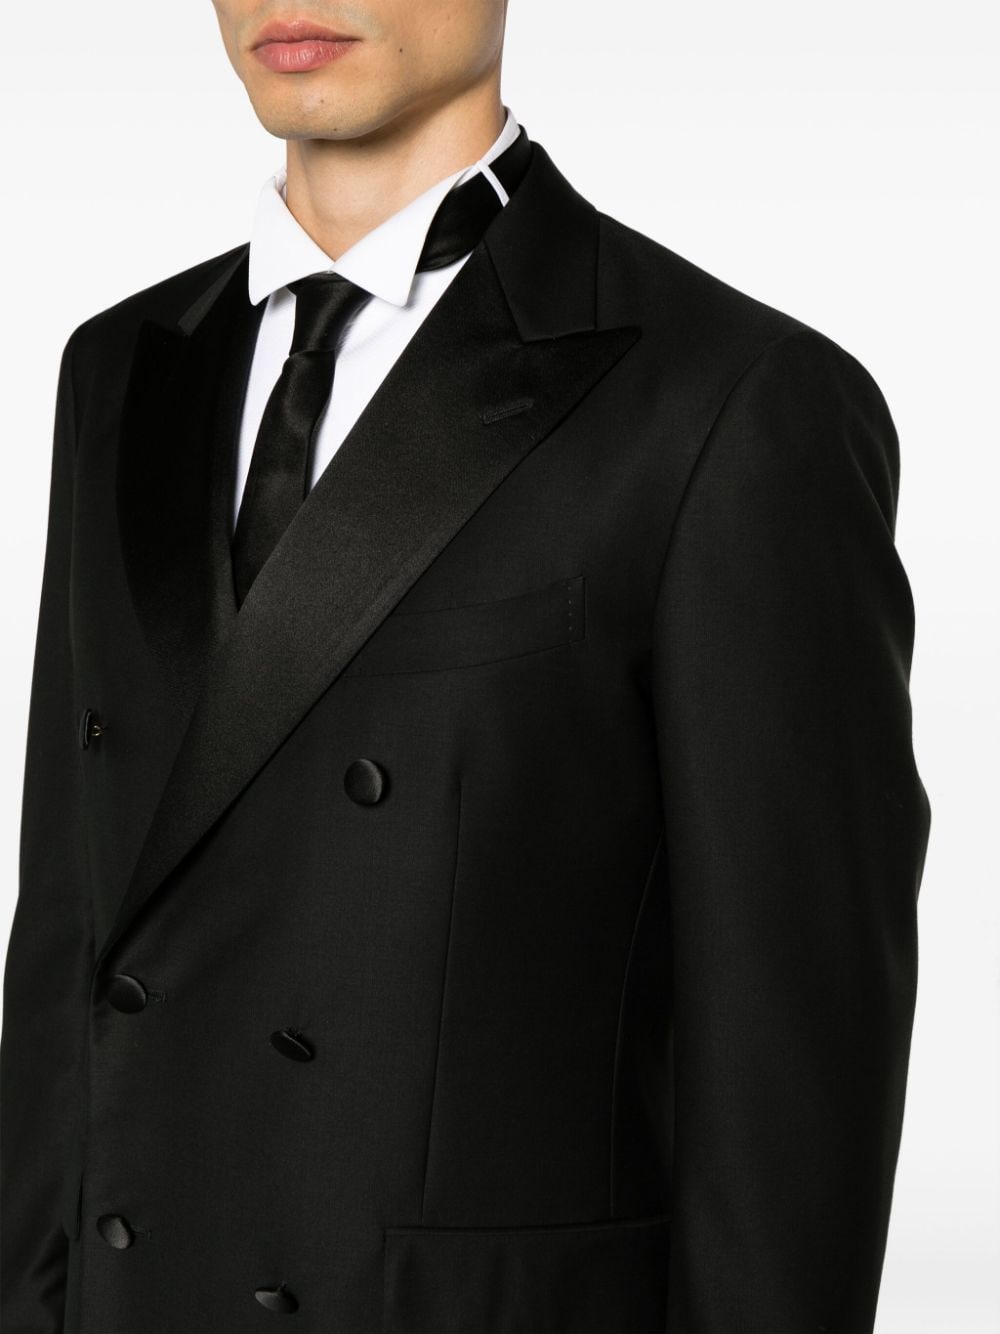 double-breasted black tuxedo